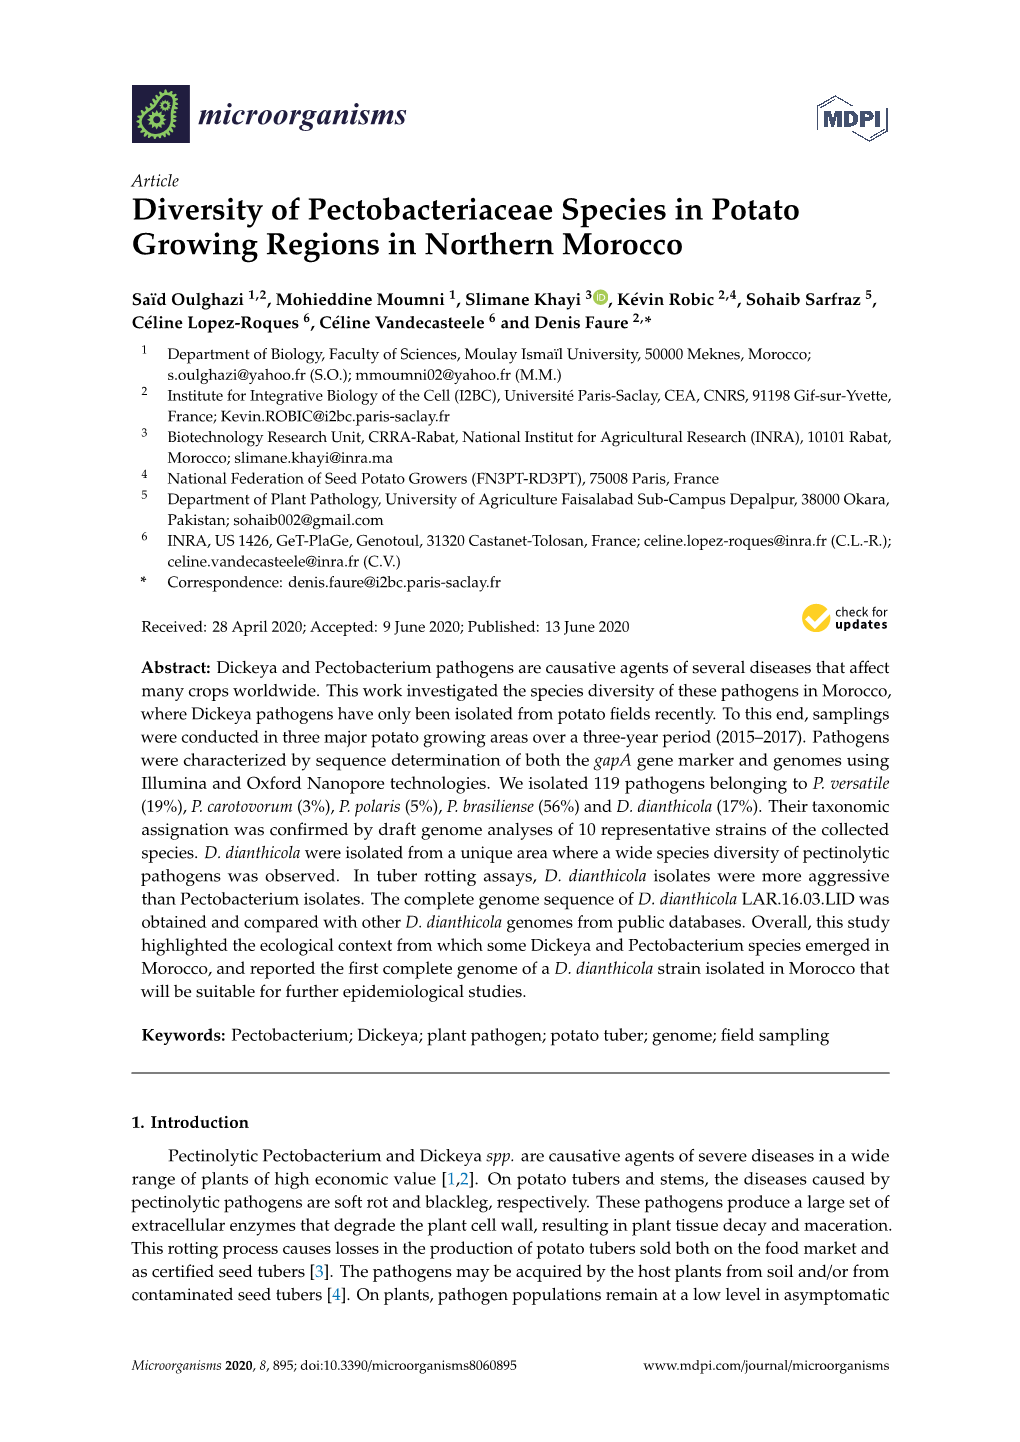 Diversity of Pectobacteriaceae Species in Potato Growing Regions in Northern Morocco